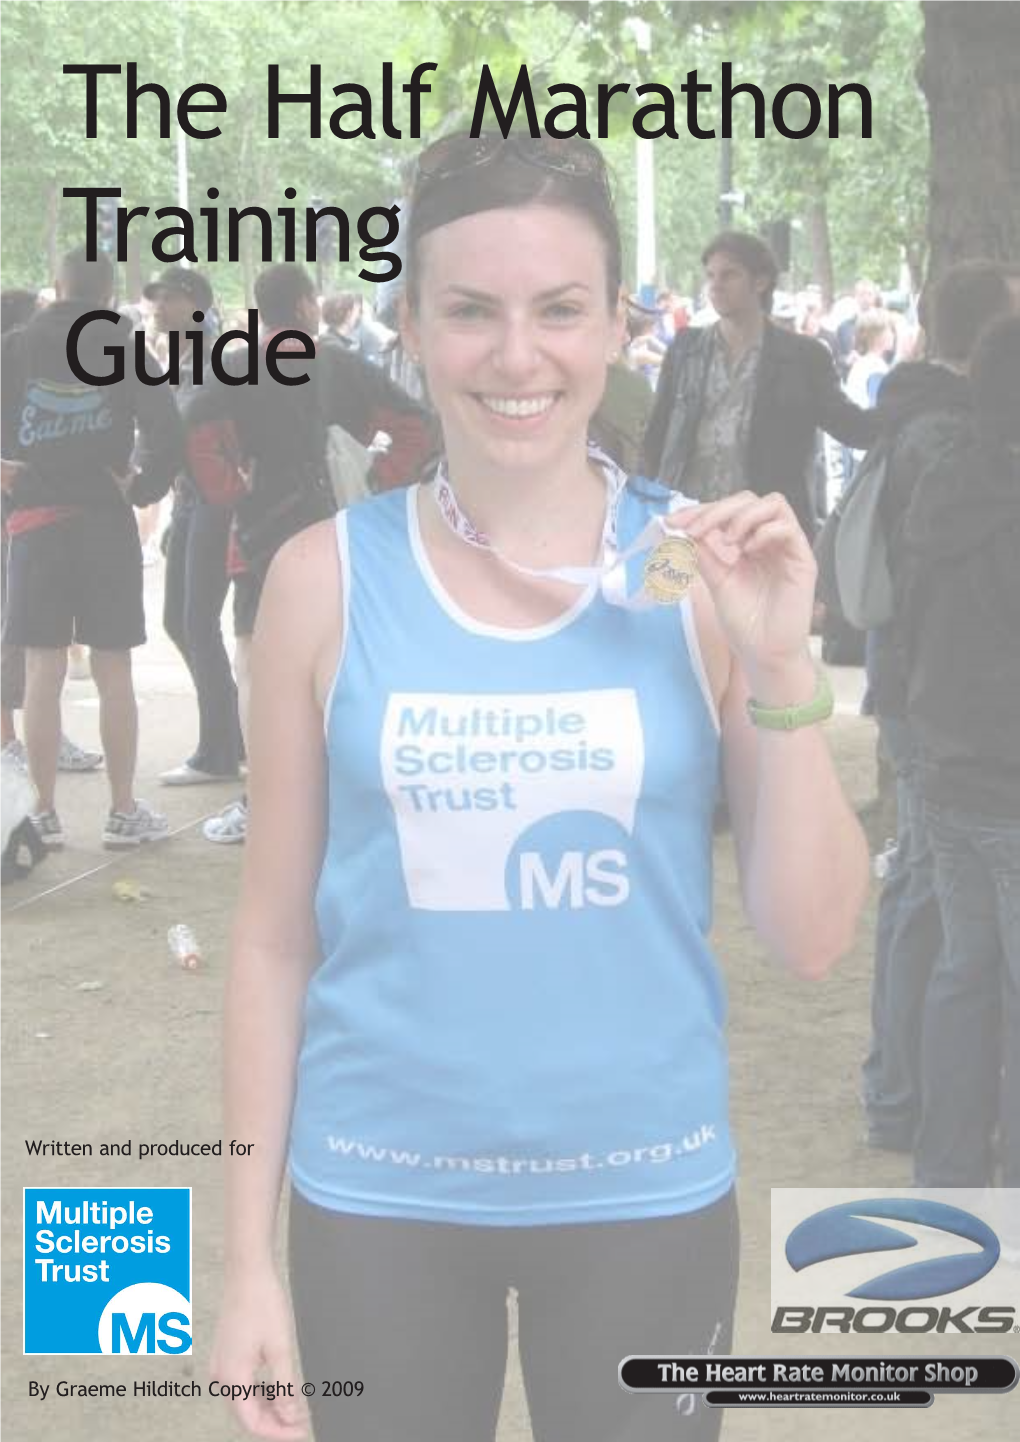 The Half Marathon Training Guide